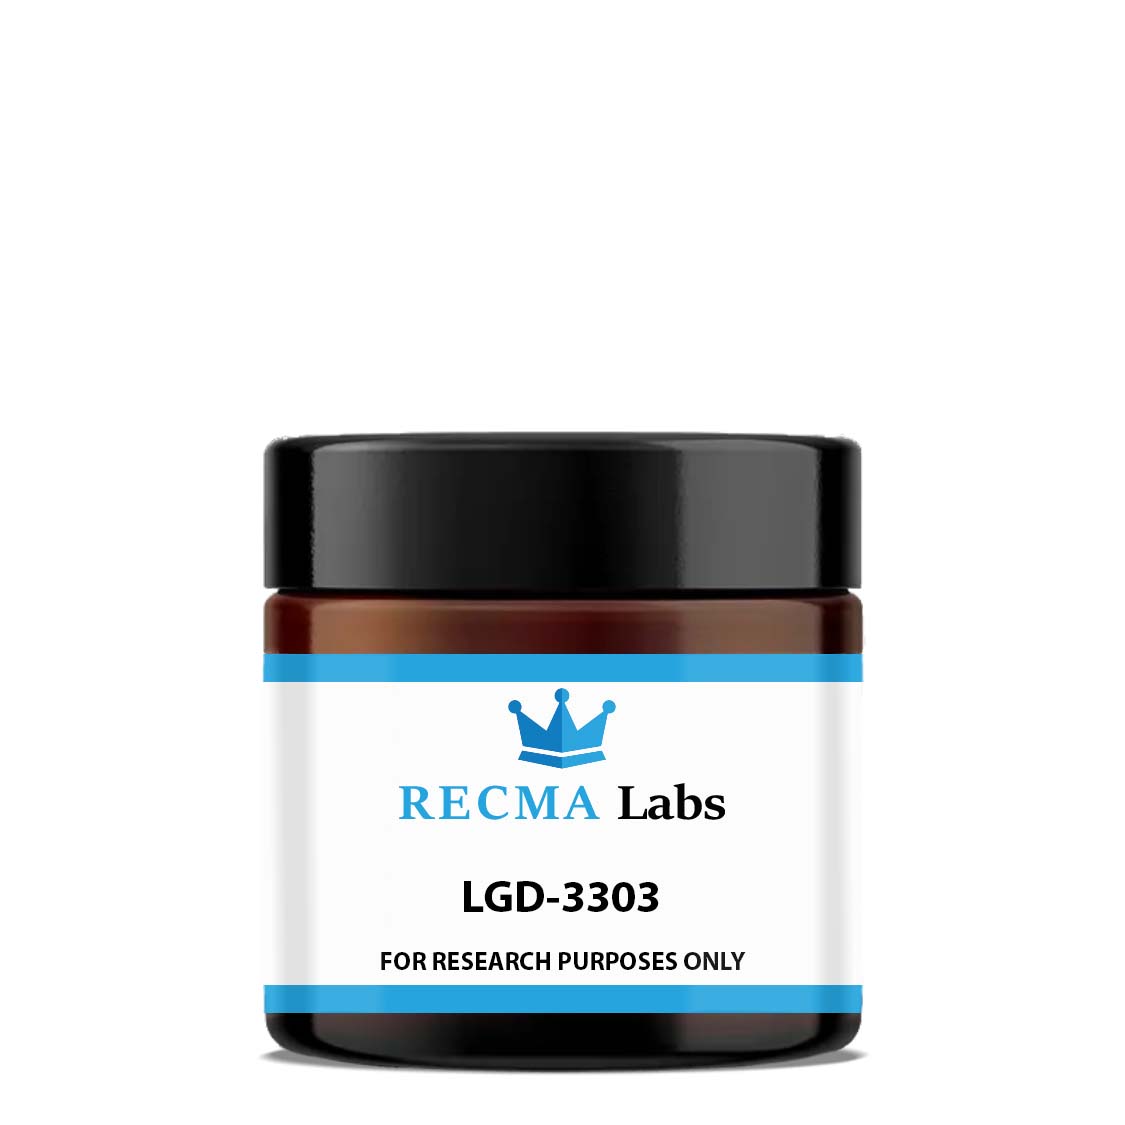 LGD-3303 Powder, 1gr - Recma Labs